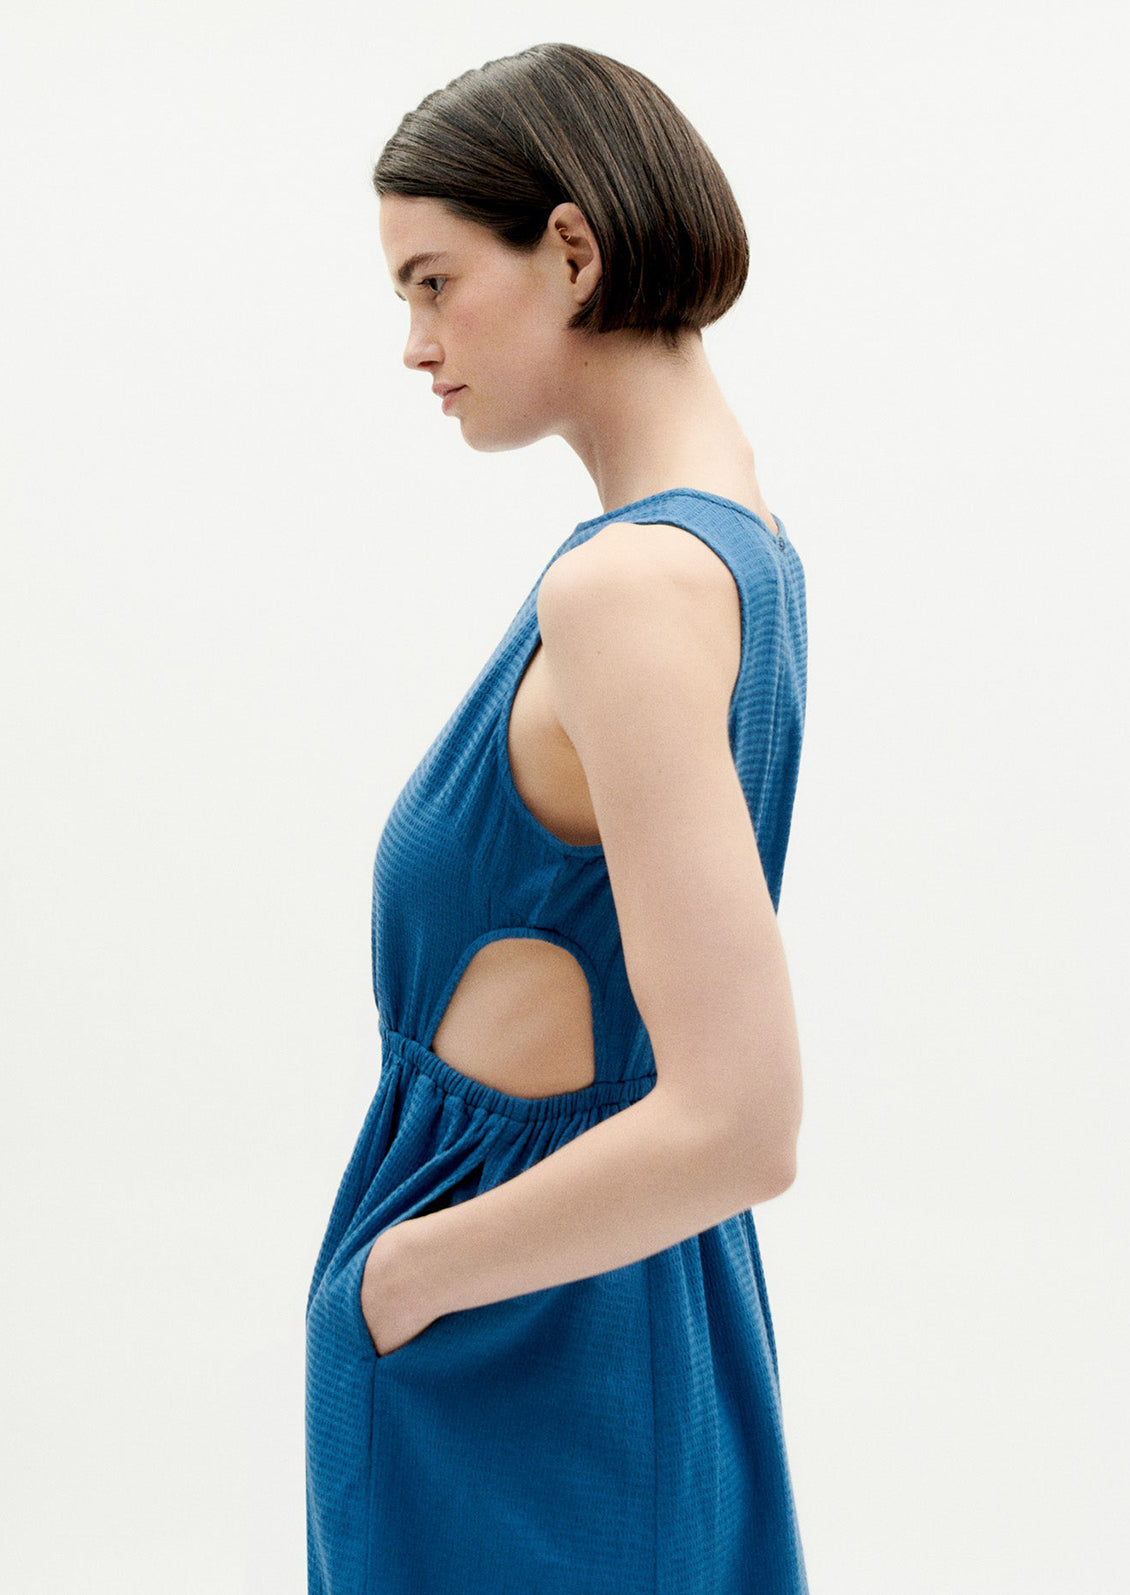 A woman wearing a blue sleeveless dress with cutouts at side waist.